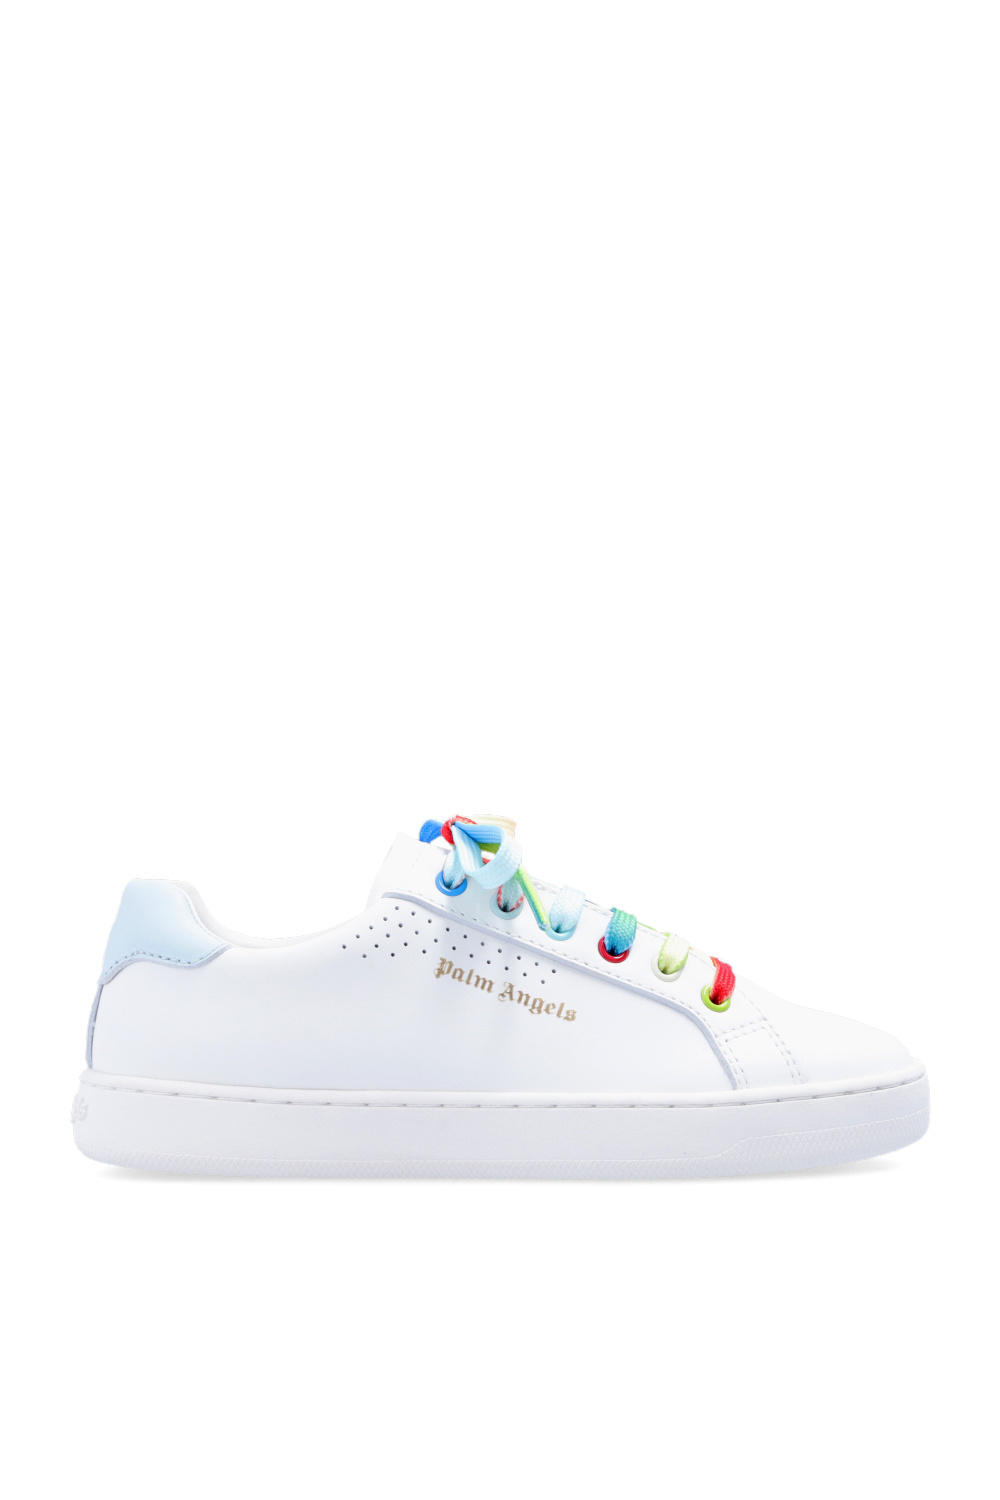 Skechers dlites-summer fiesta womens shoes white-multi 149015-wmlt ‘Palm 1’ sneakers